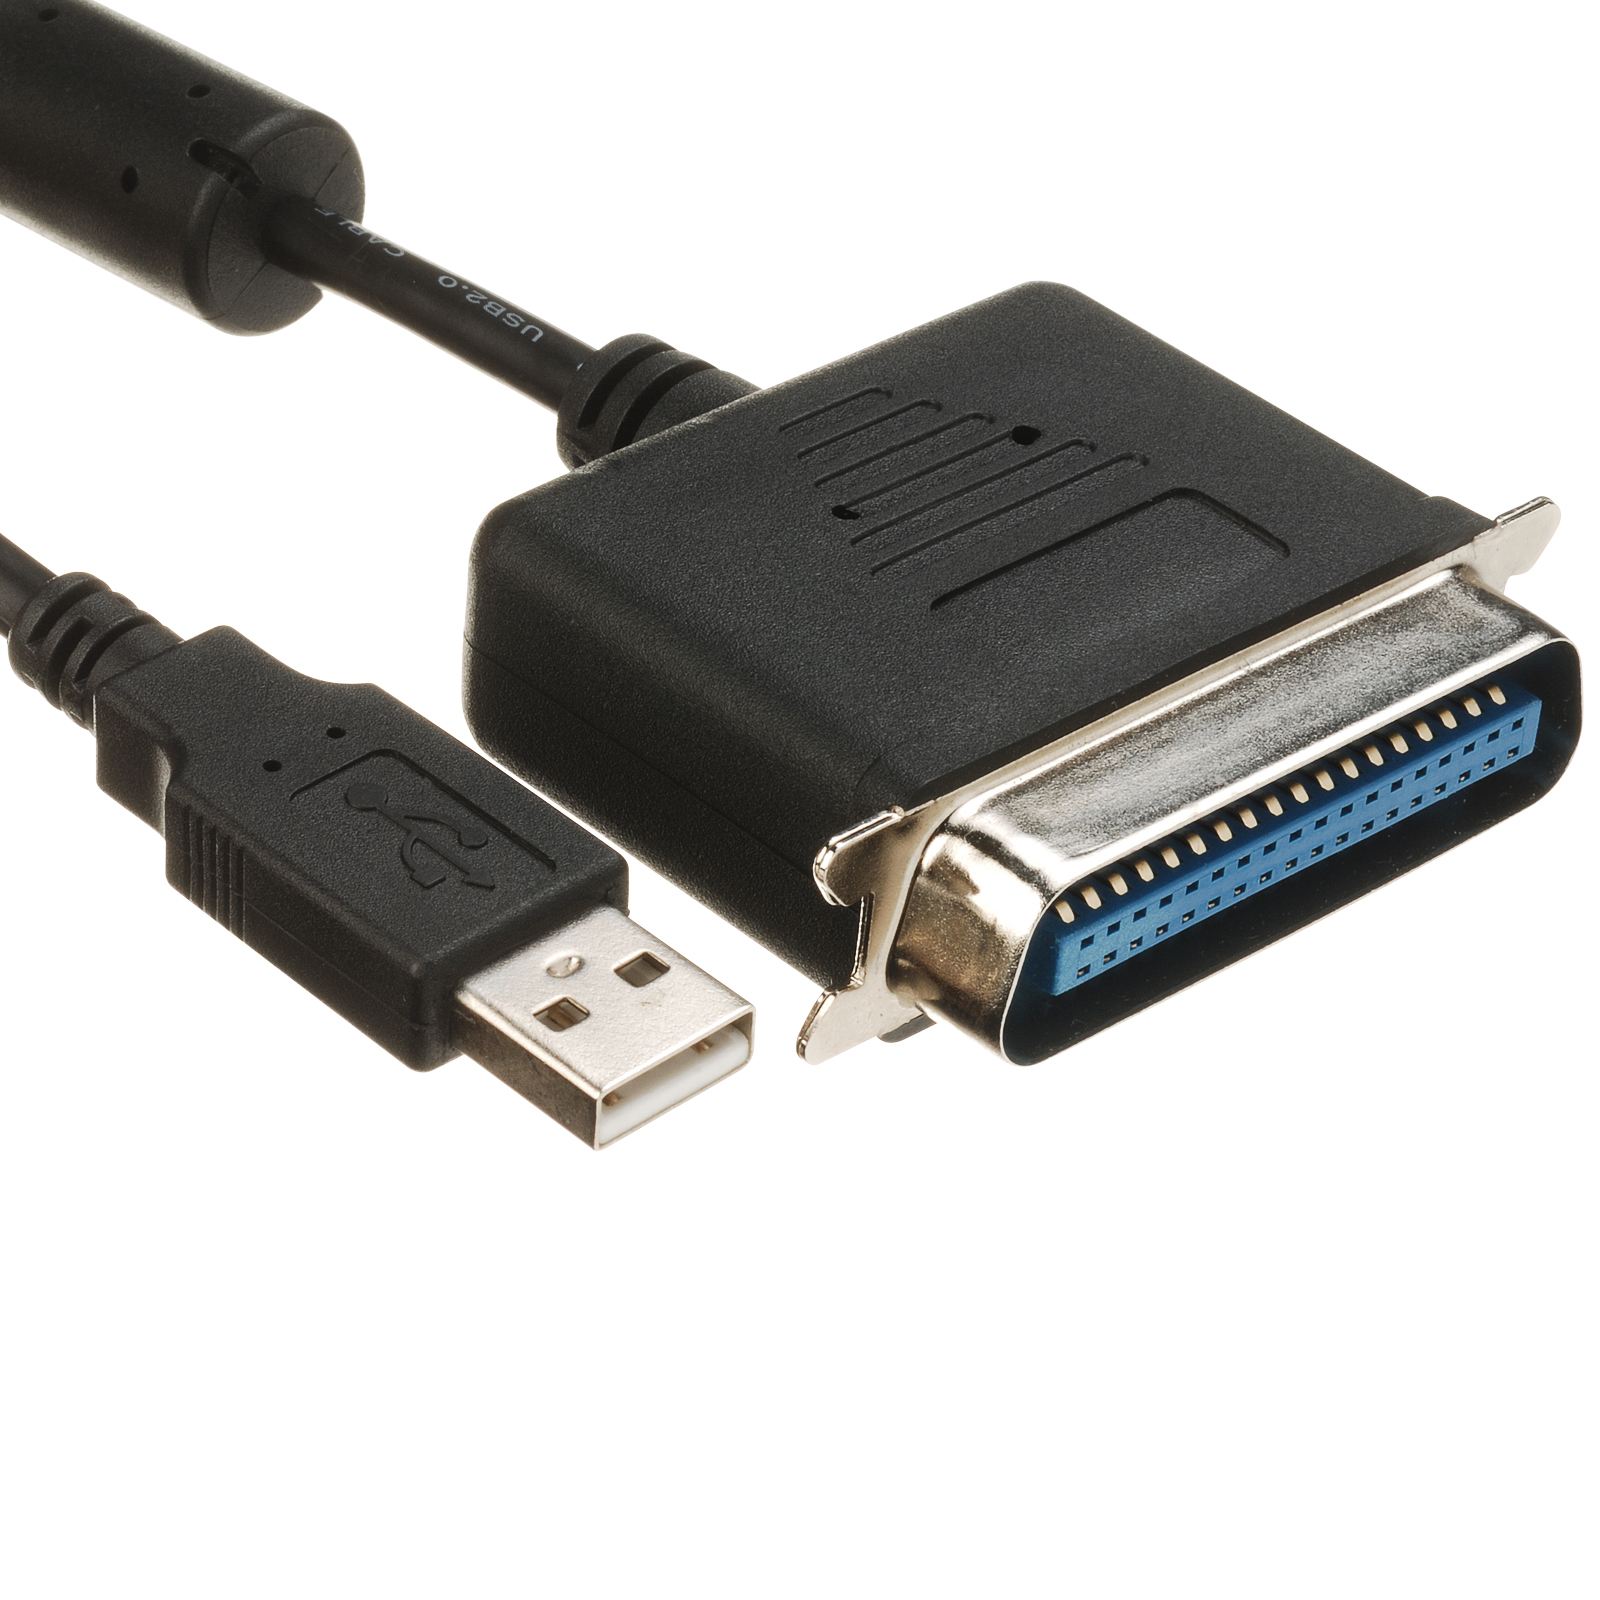 HF-CB-USB2P-B: USB to Parallel 1284 Printer Cable, 6 feet